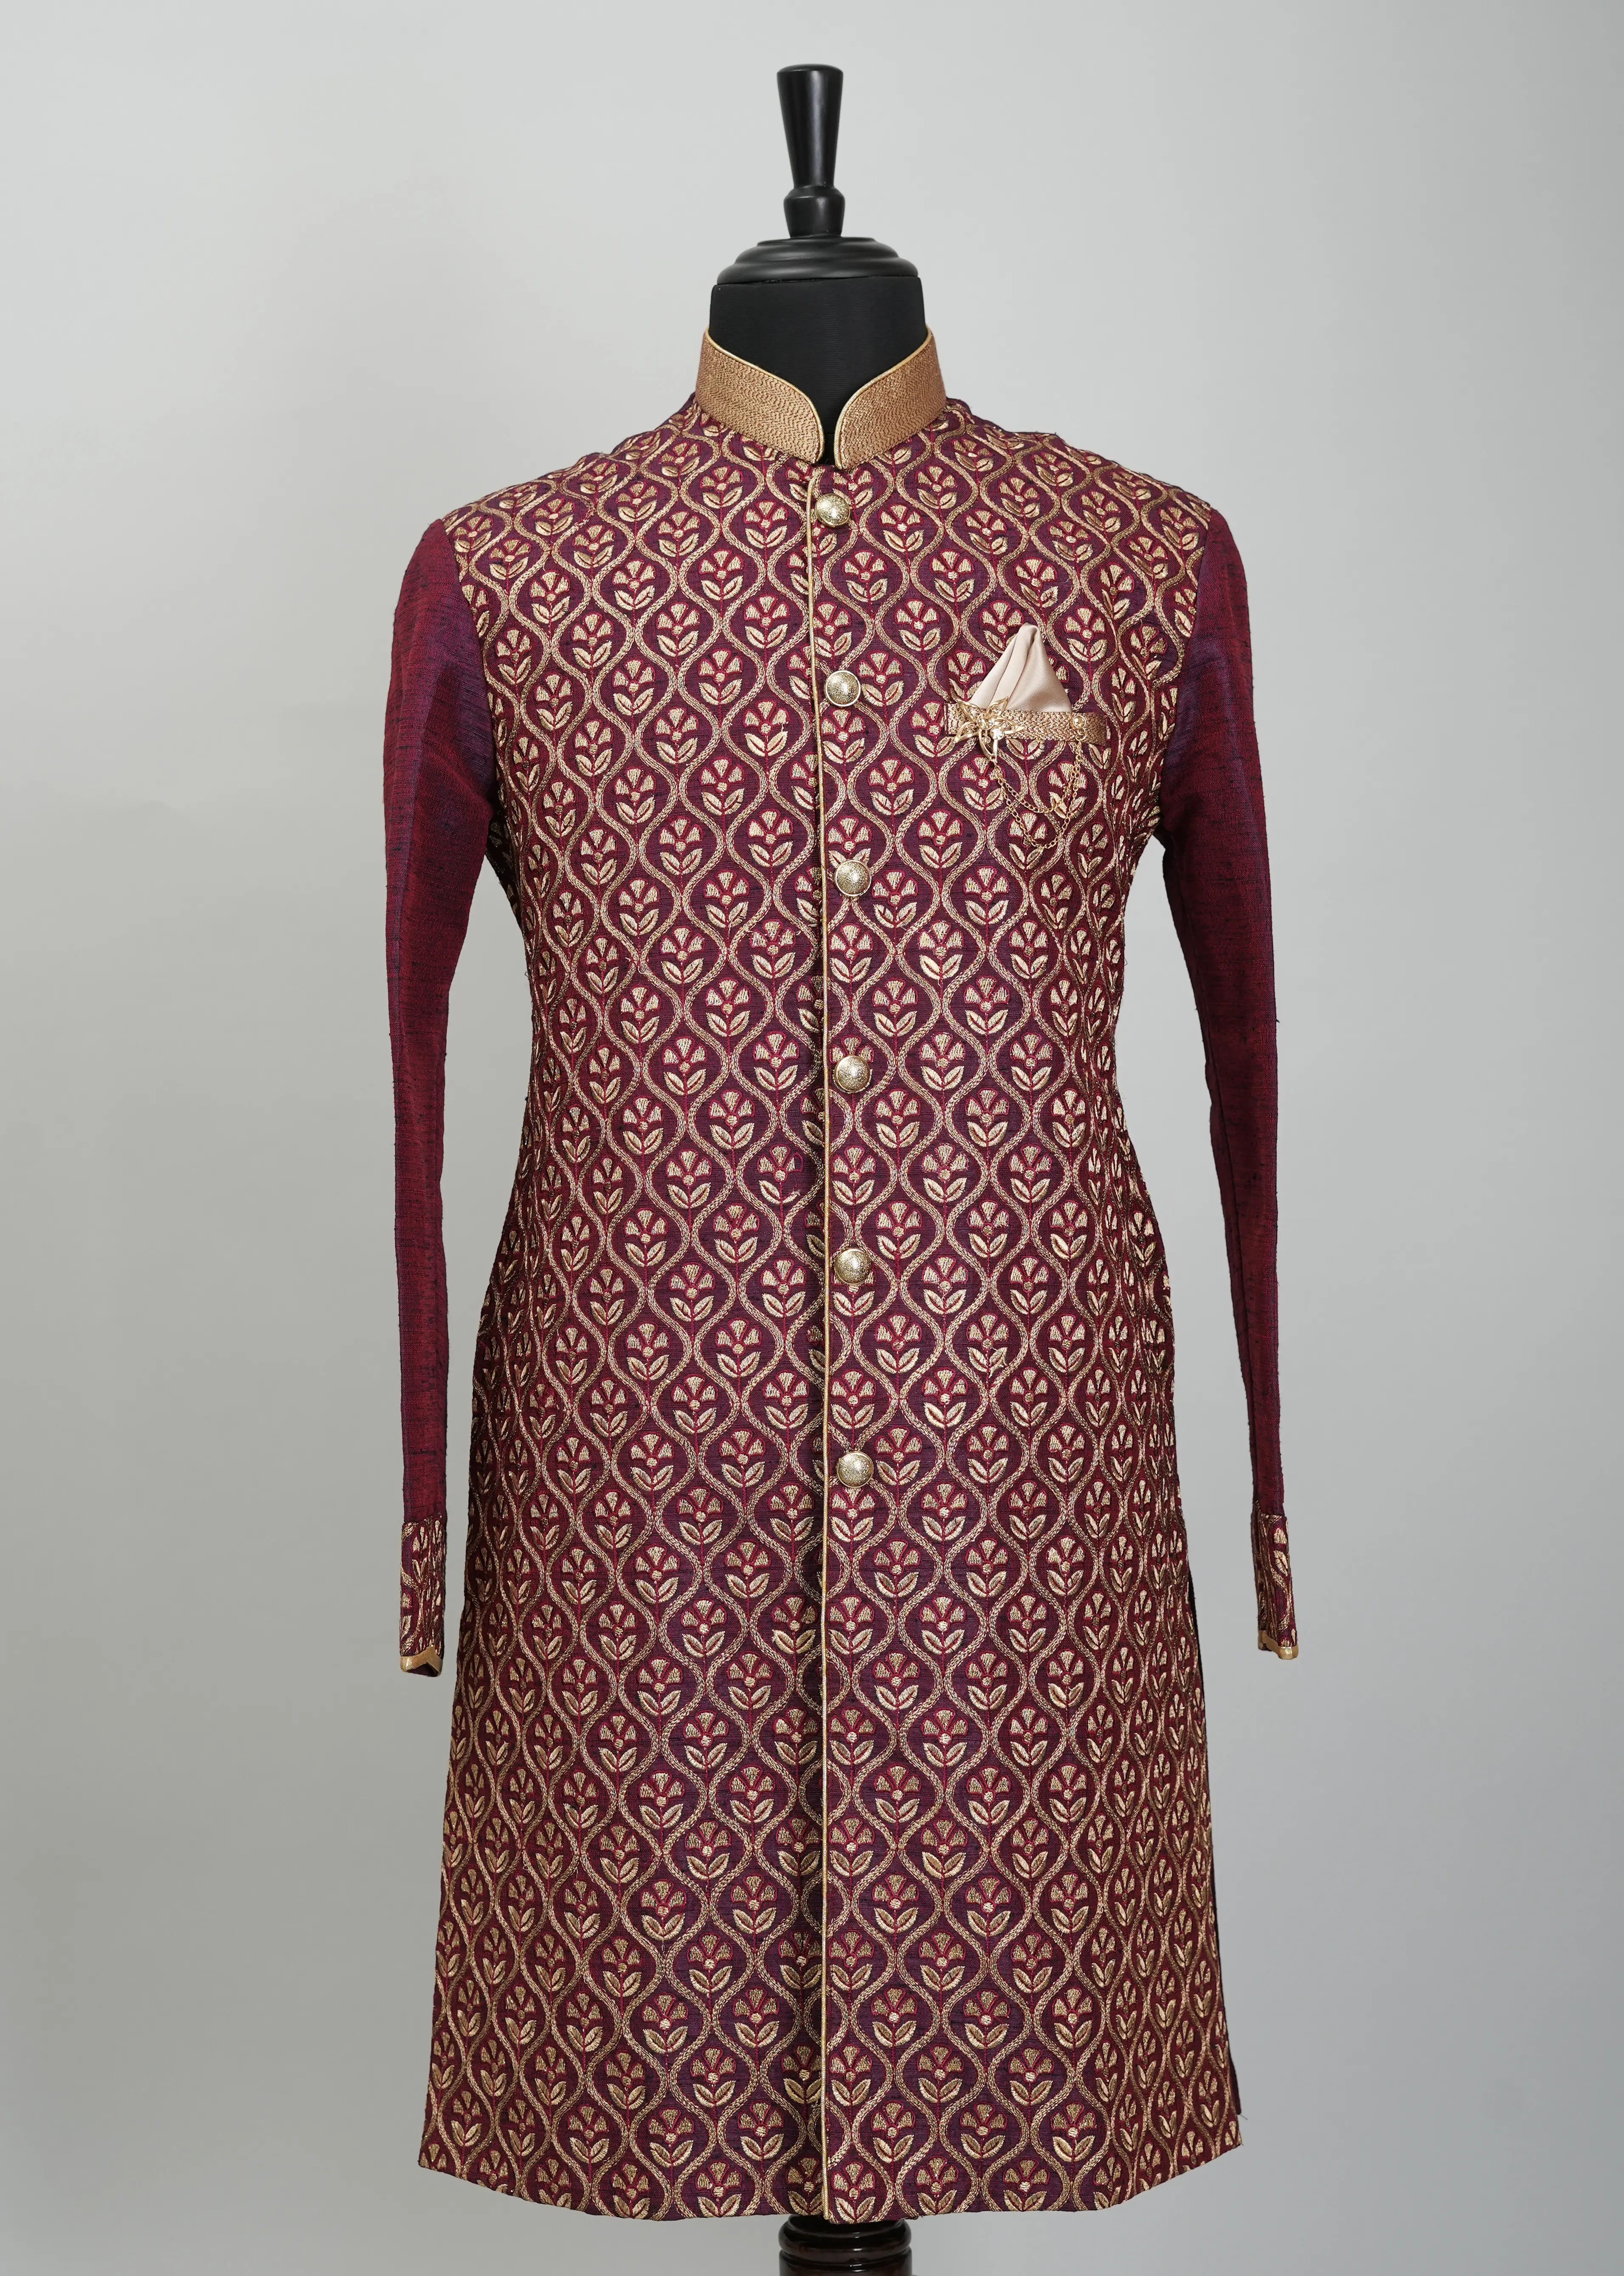 Maroon Leafy embroidery Indowestern Suit